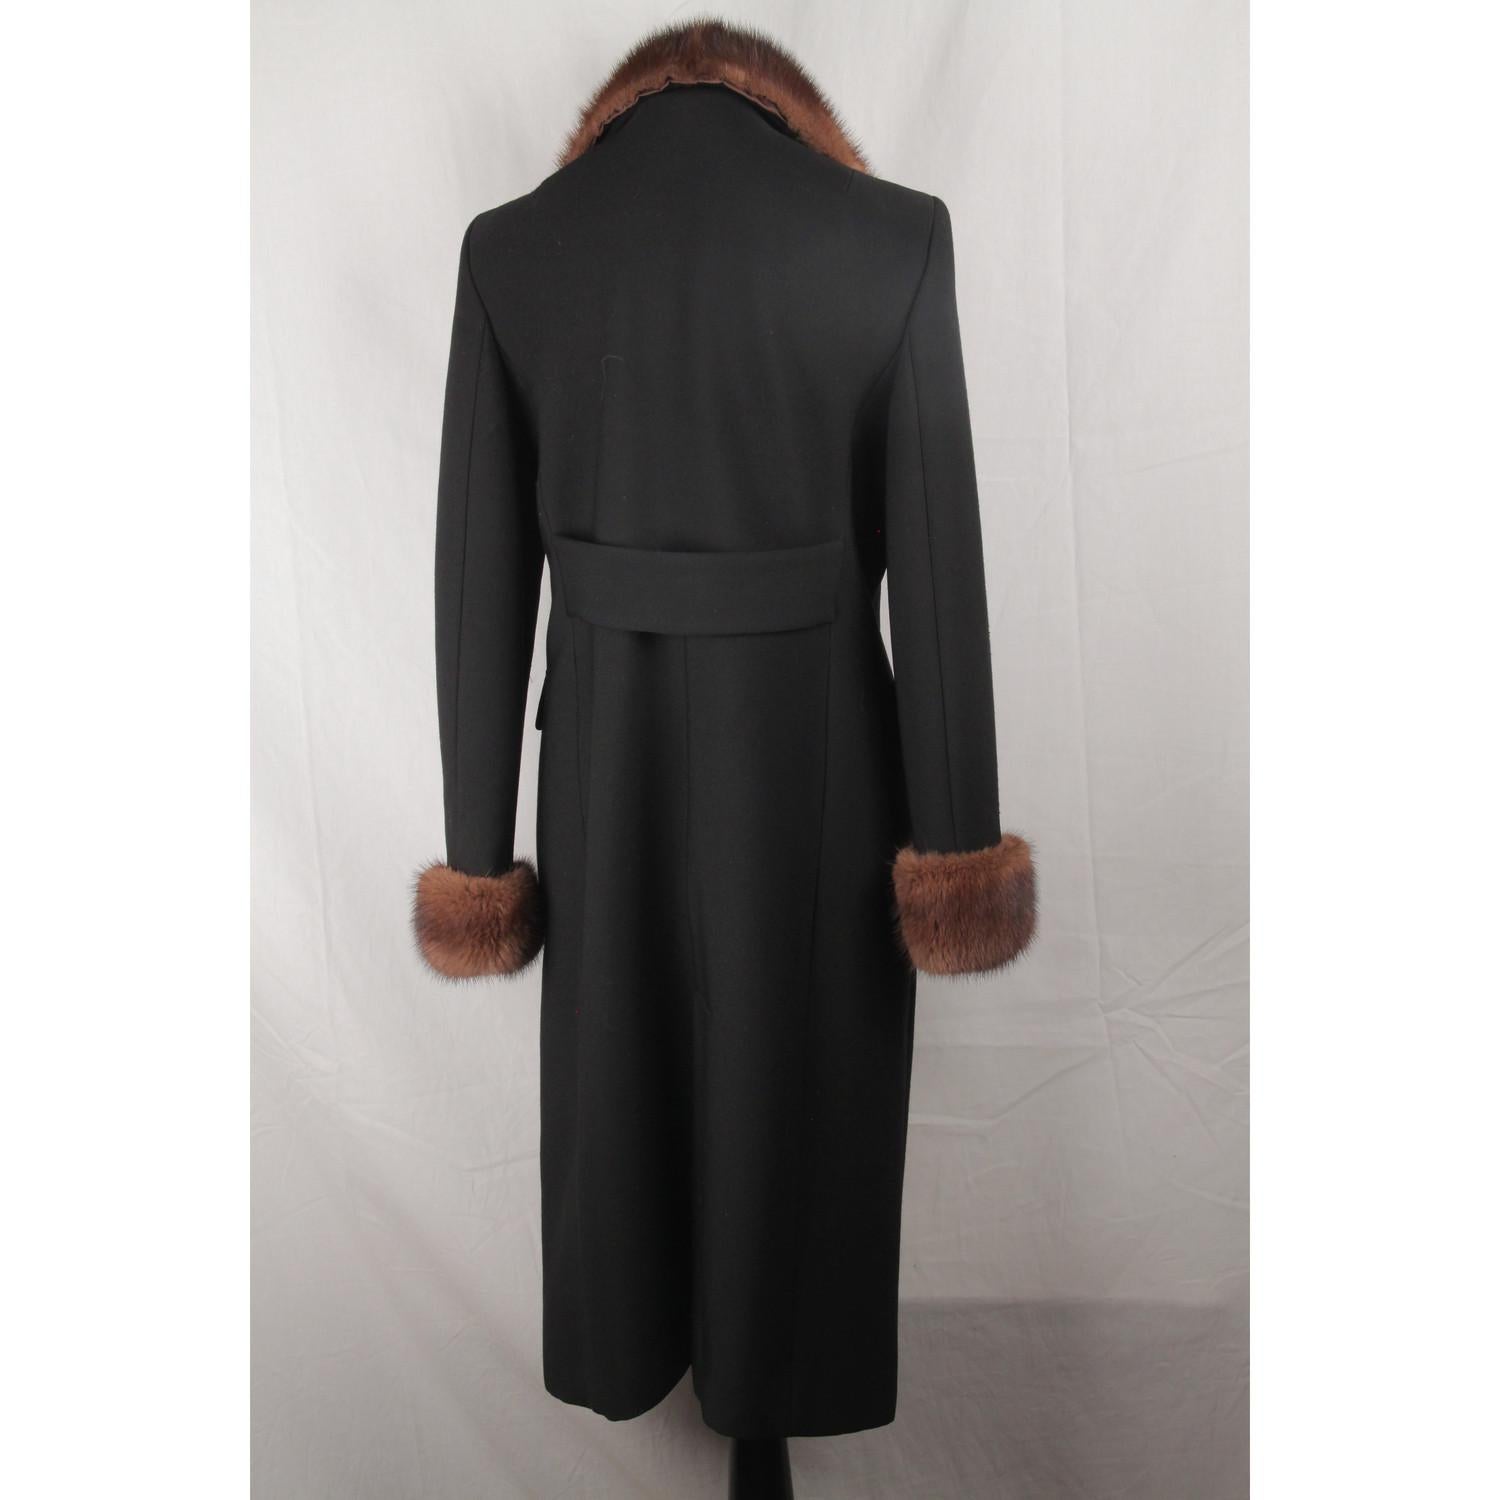 Les Copains Black Wool Tailored Coat with Mink Fur Trim Size 44 1